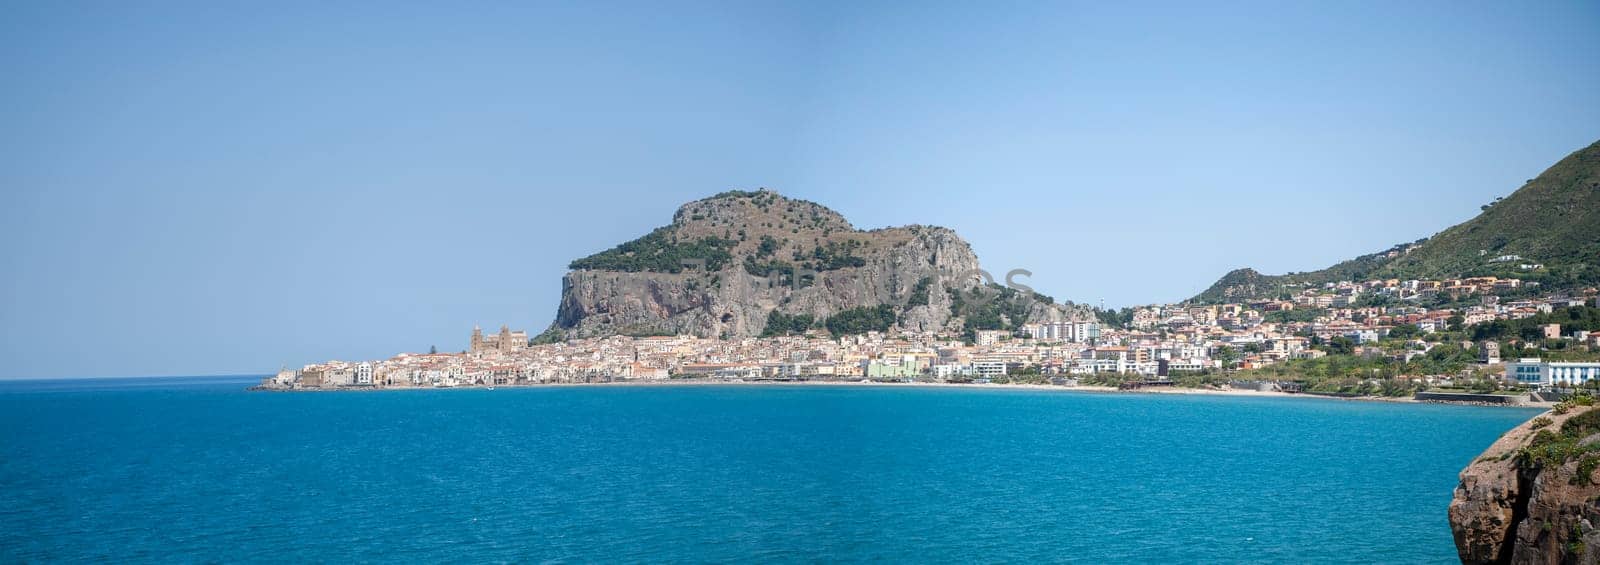 Panoramic view of Cefalù, Sicily